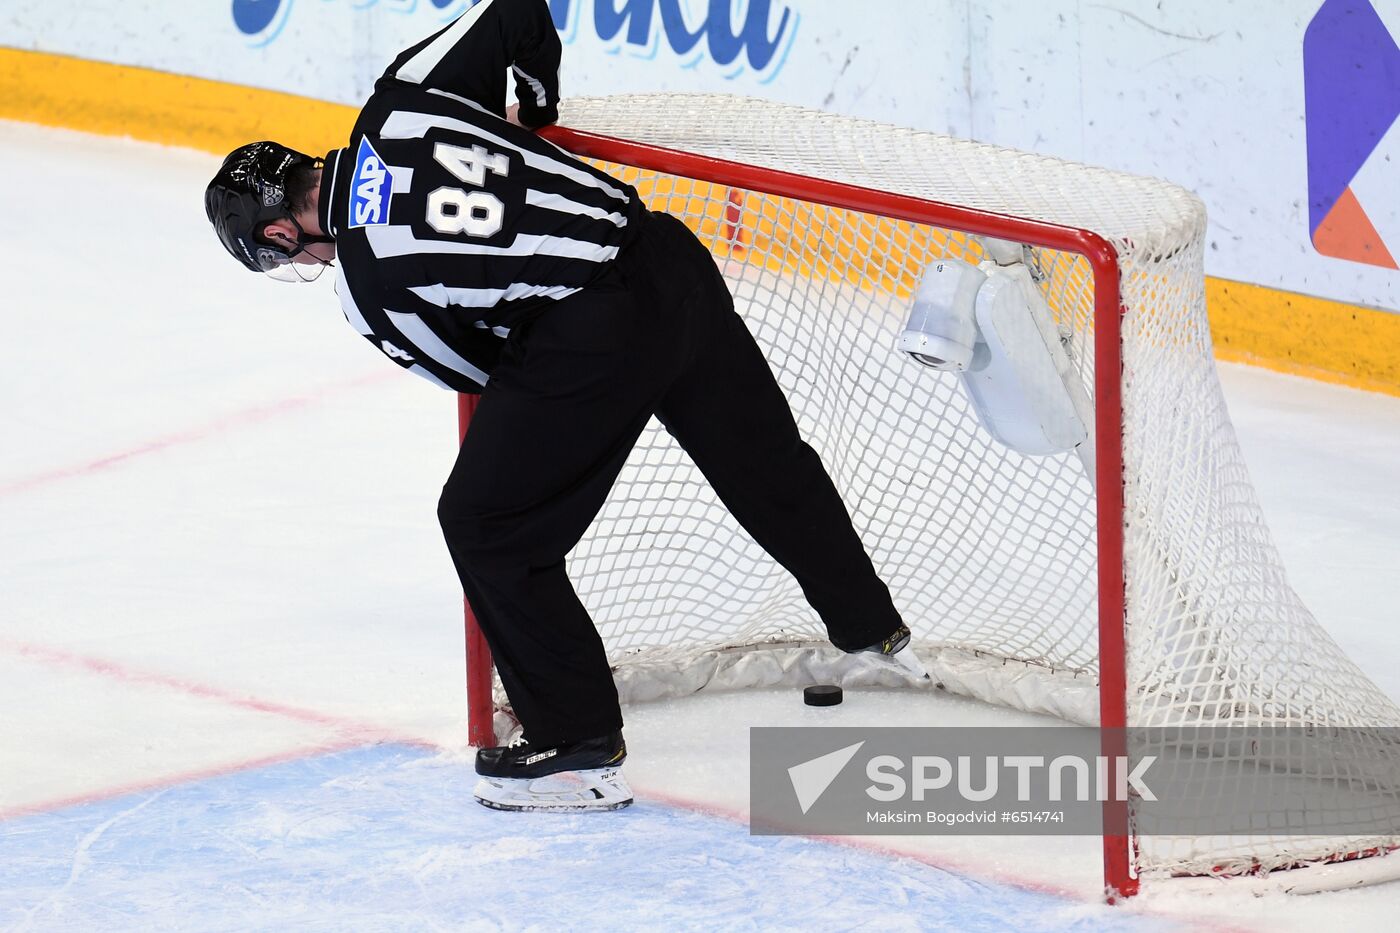 Russia Ice Hockey Ak Bars - Avangard